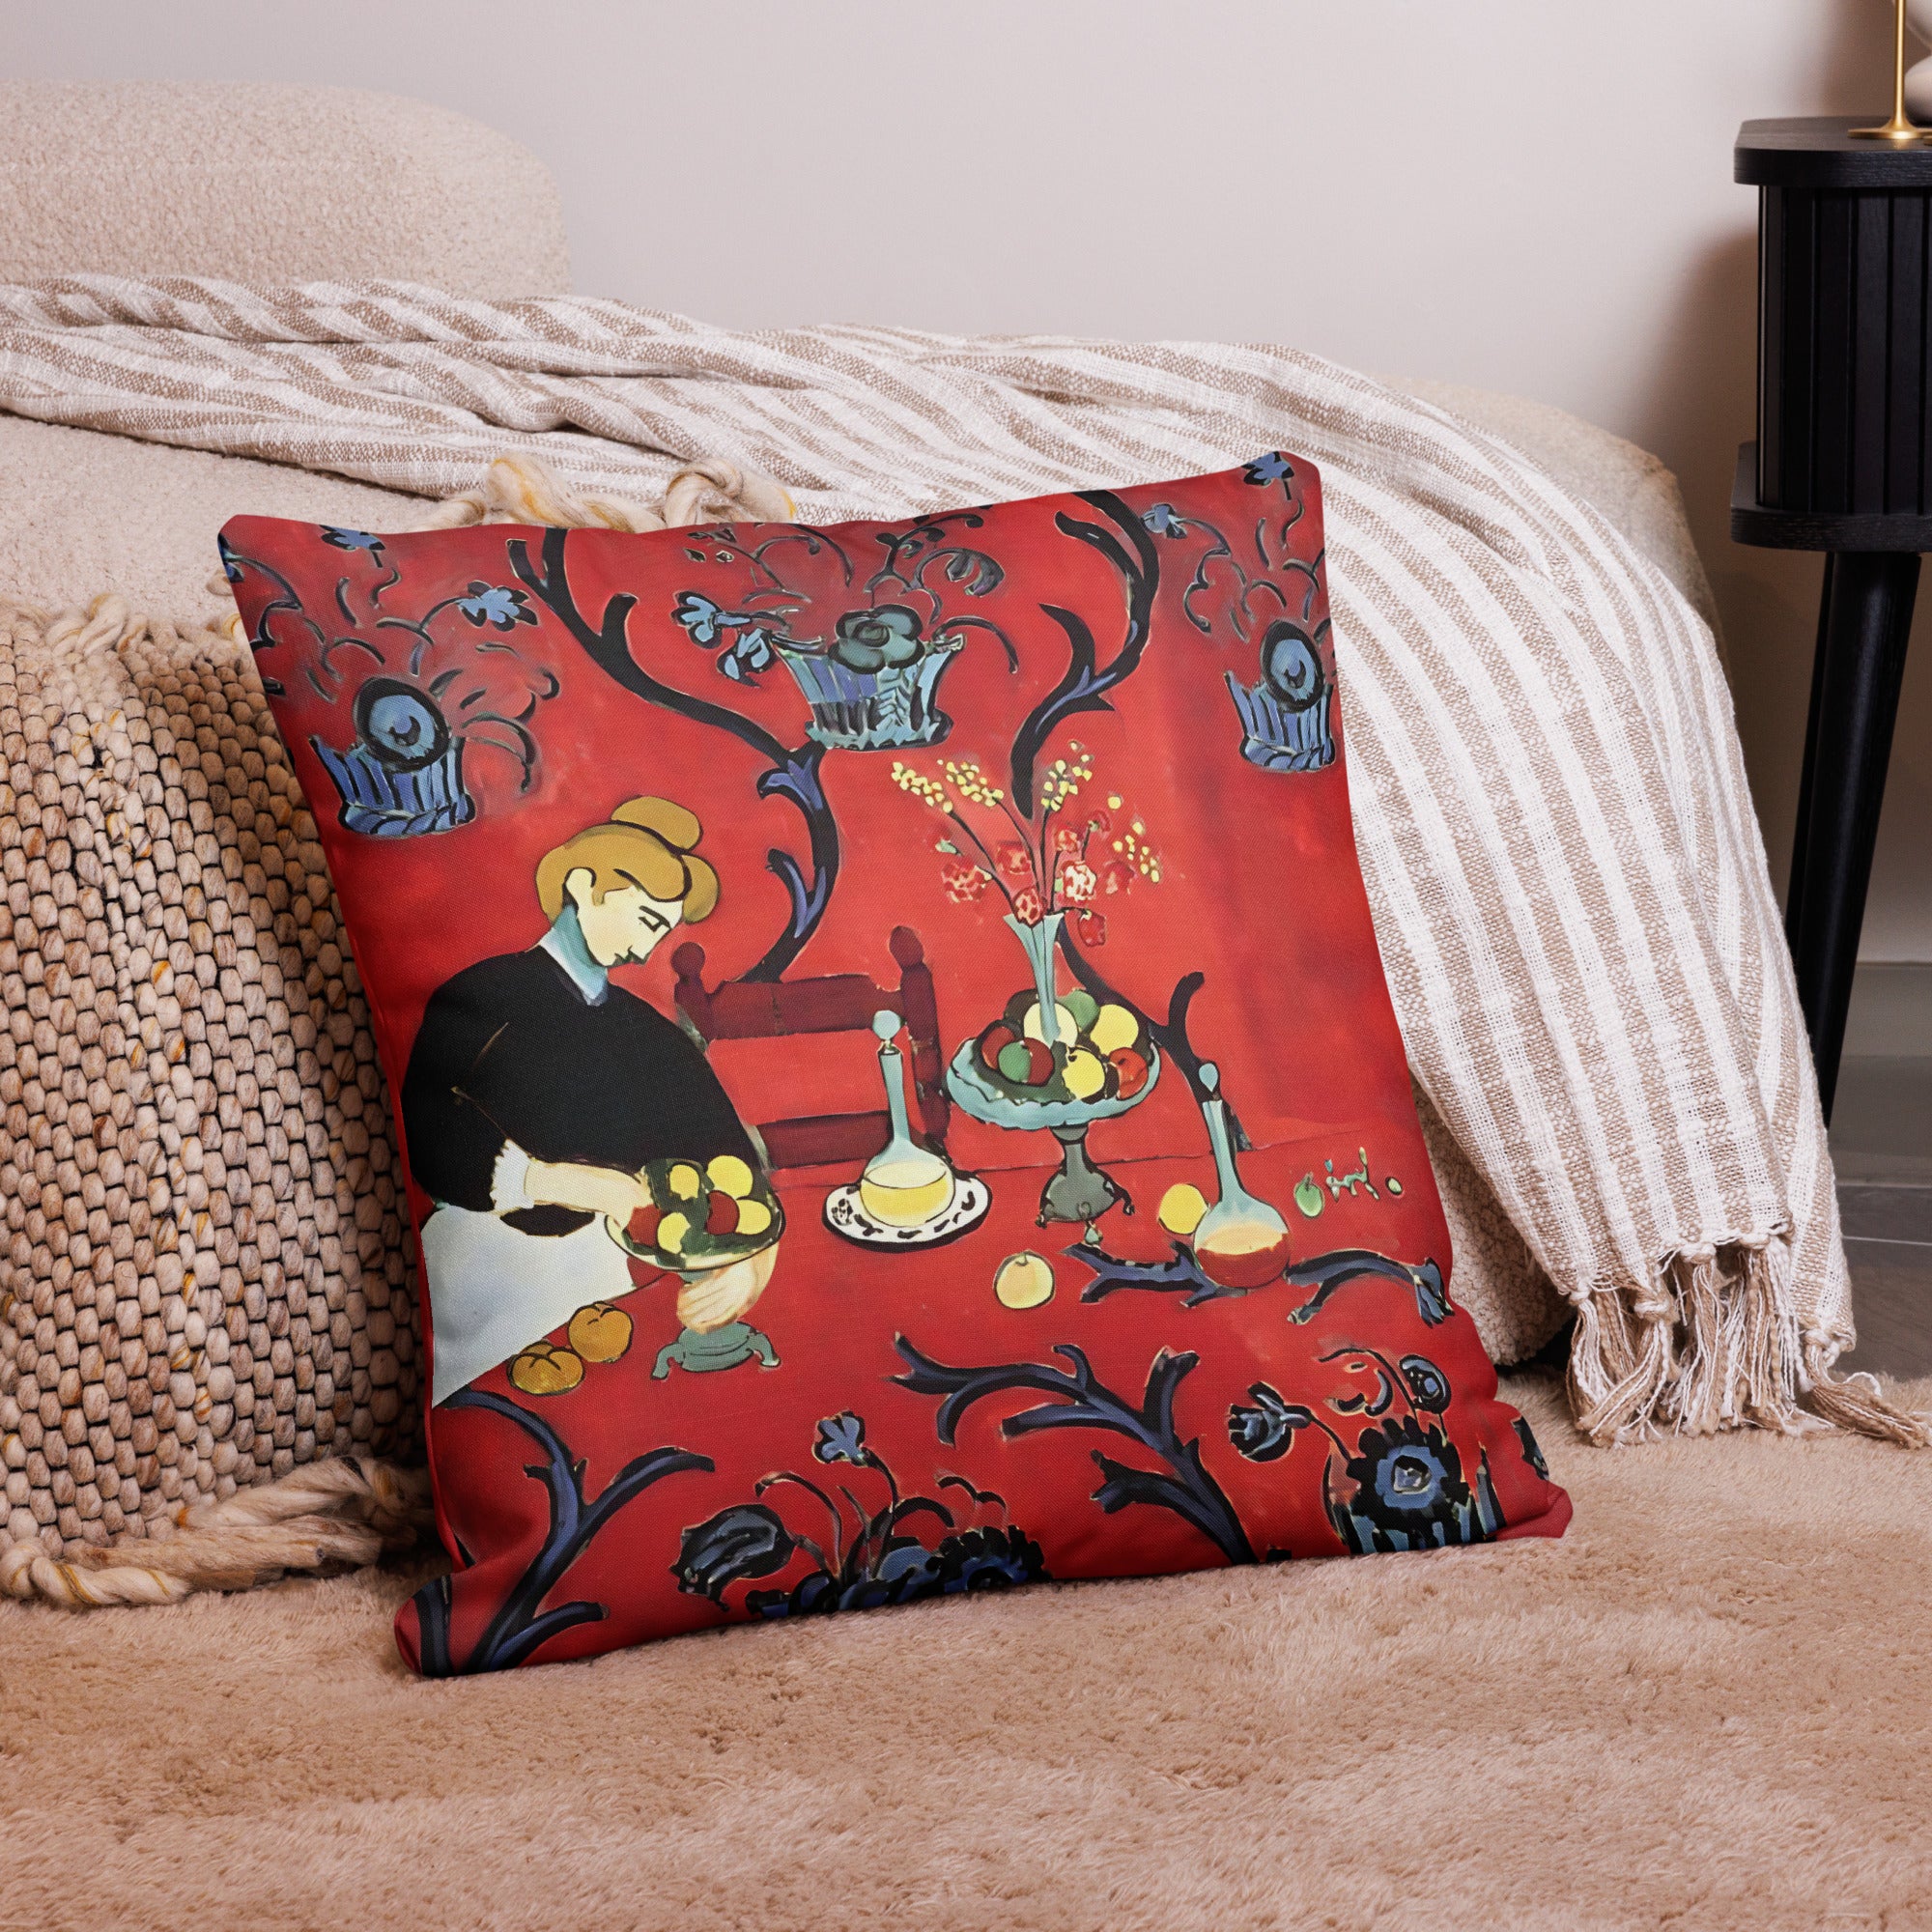 Henri Matisse ‘The Red Room’ Famous Painting Premium Pillow | Premium Art Cushion